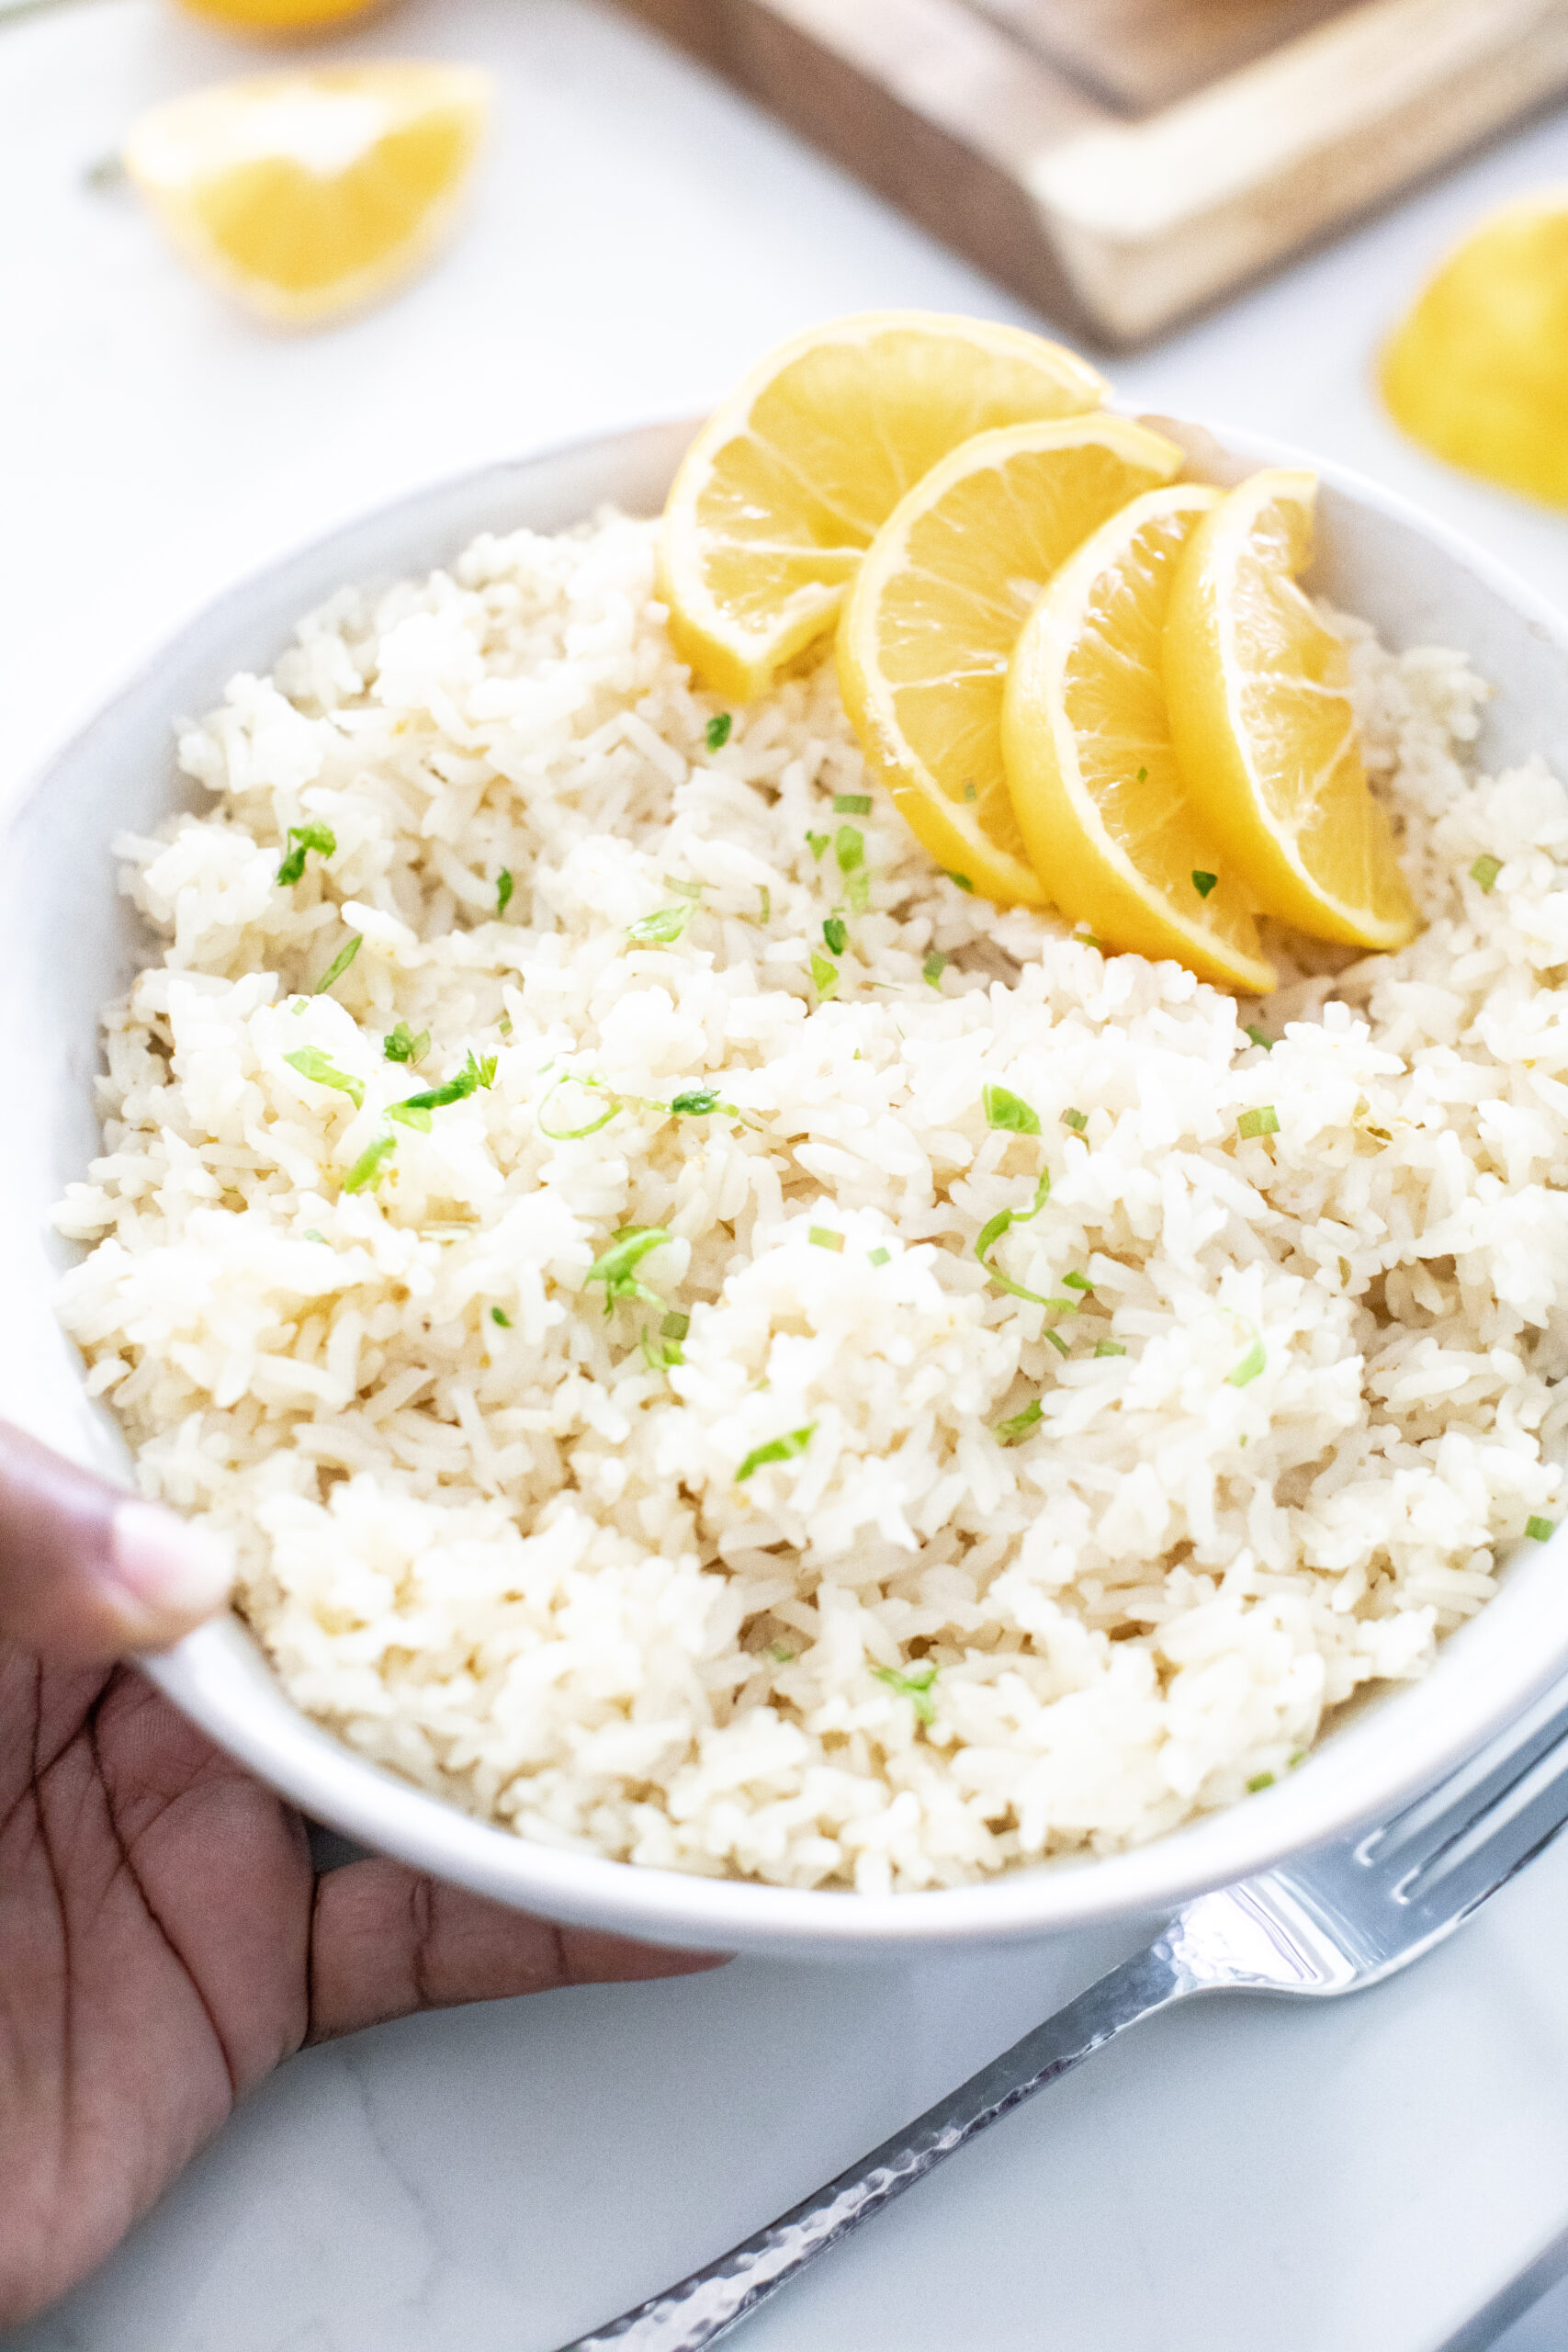 How to Make Lemon Rice